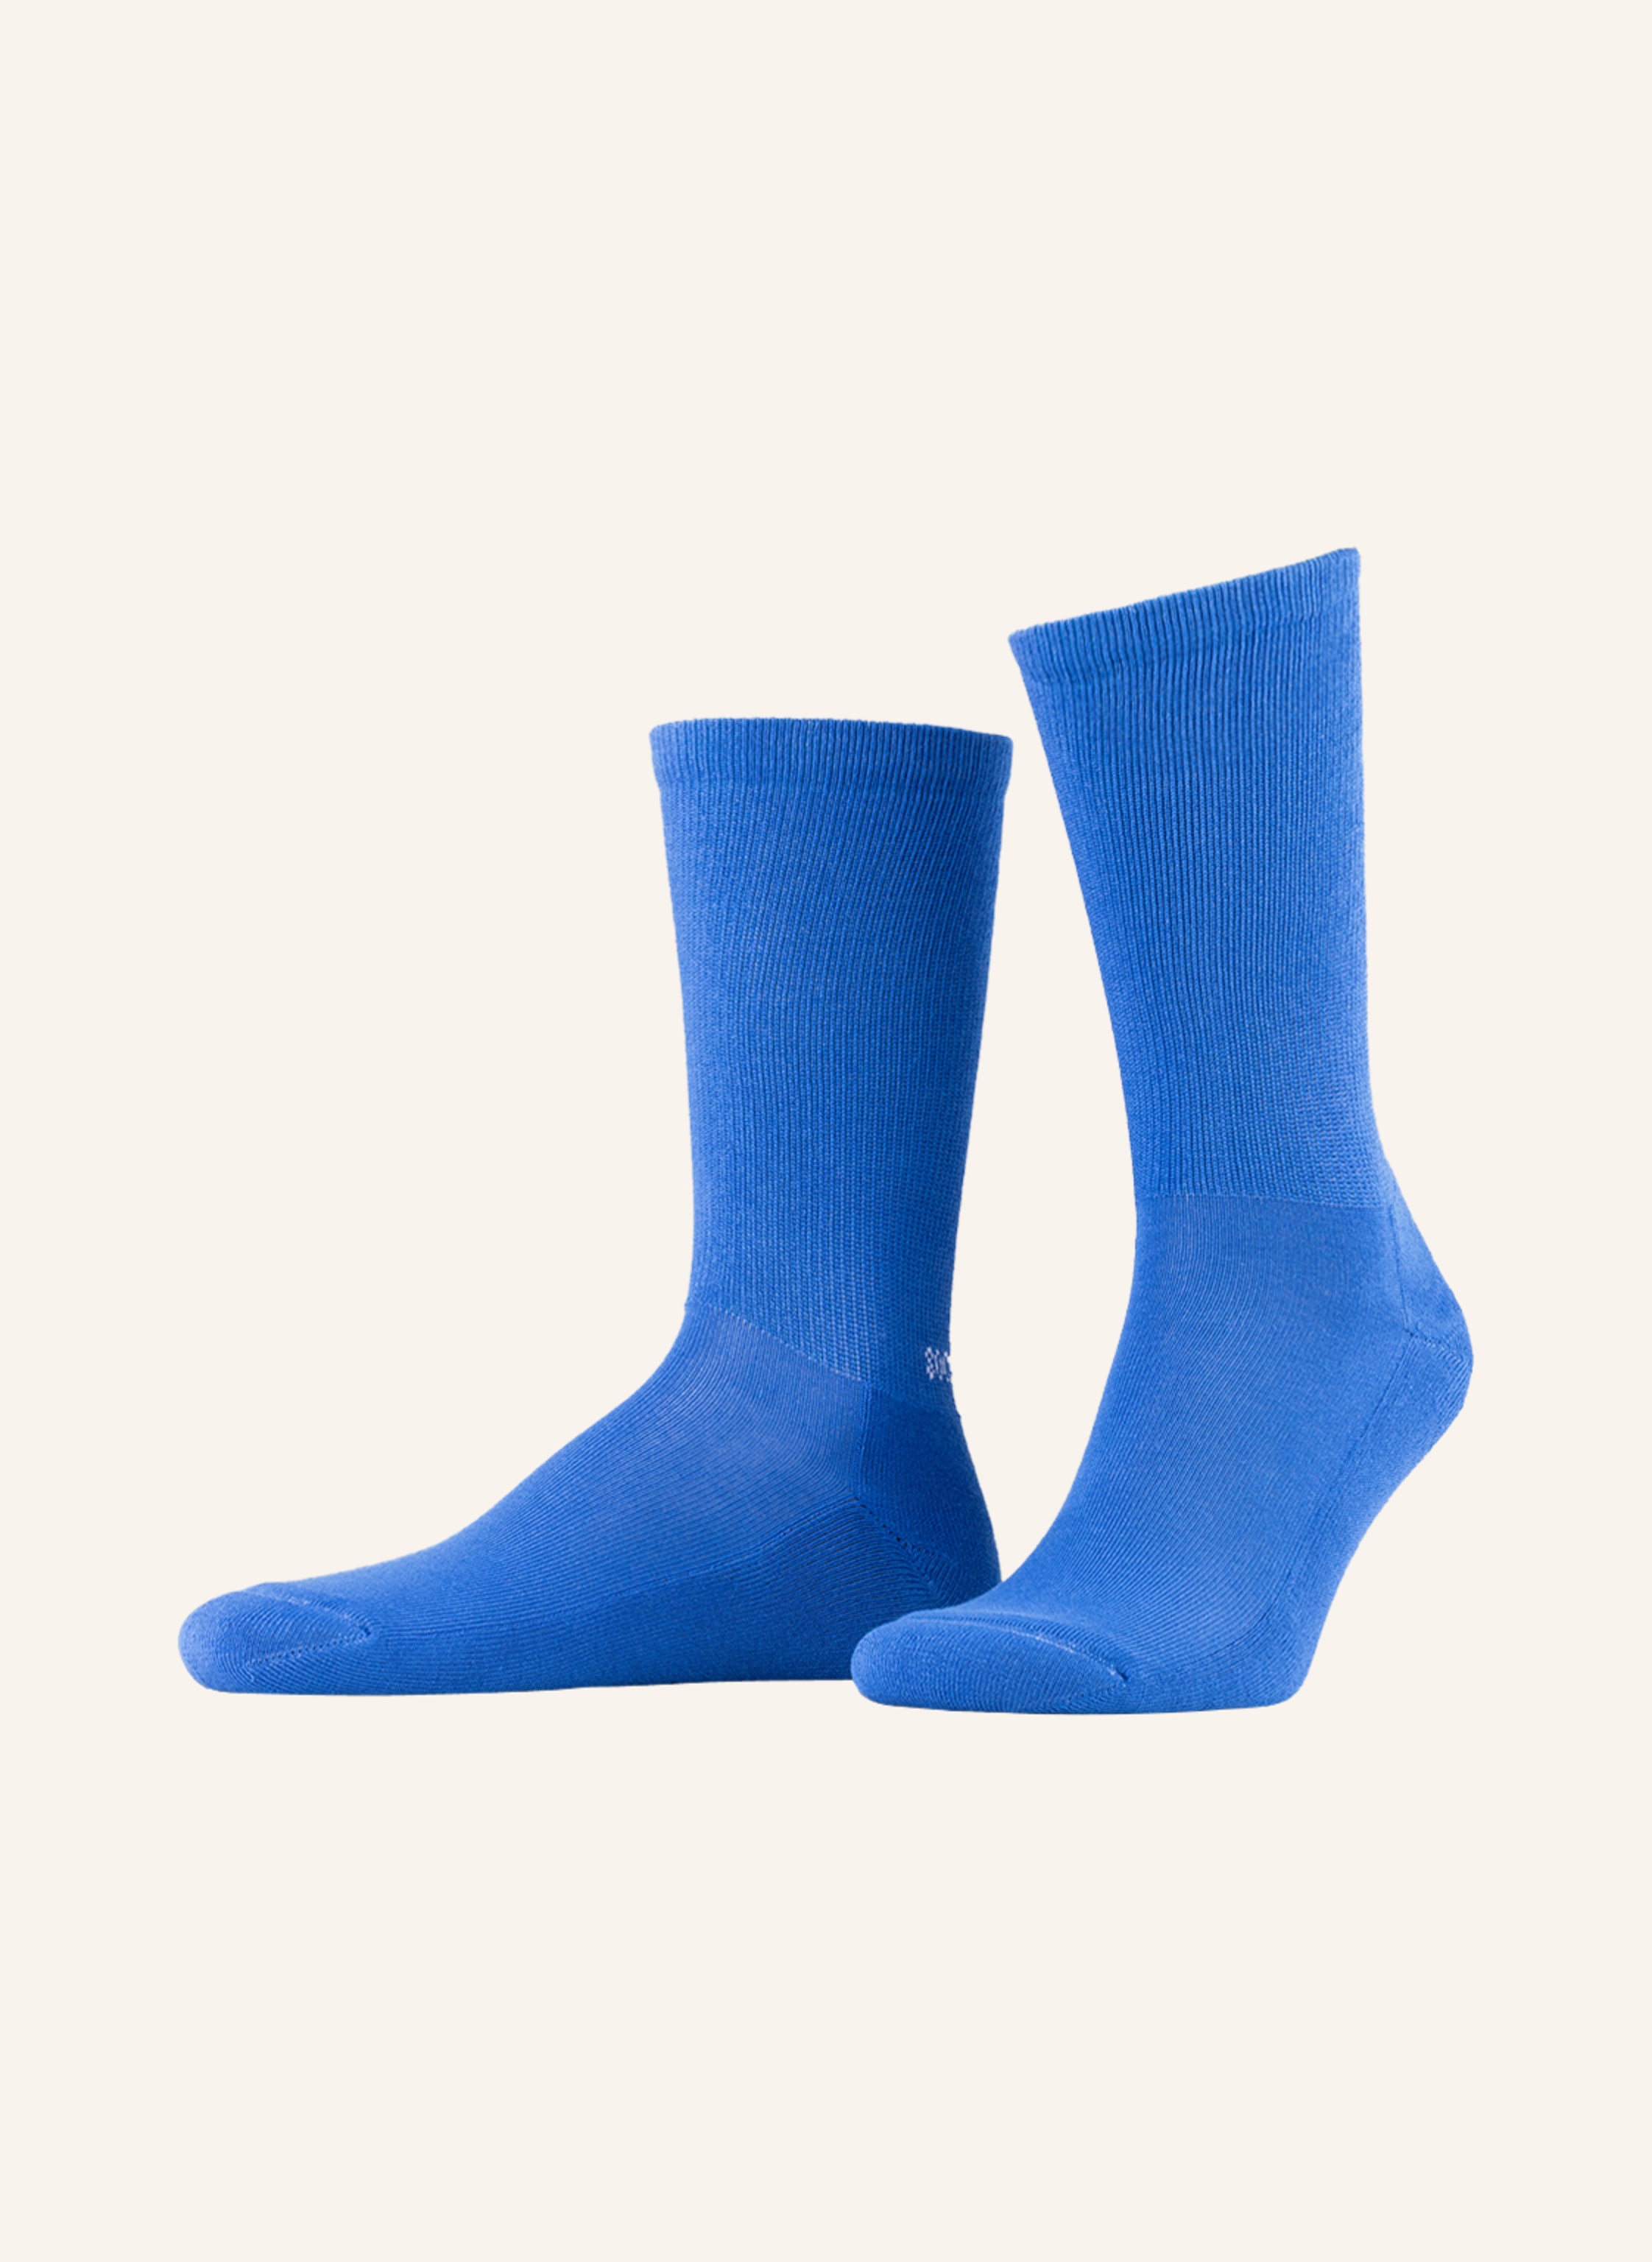 CORETEX - BLUE, Socks